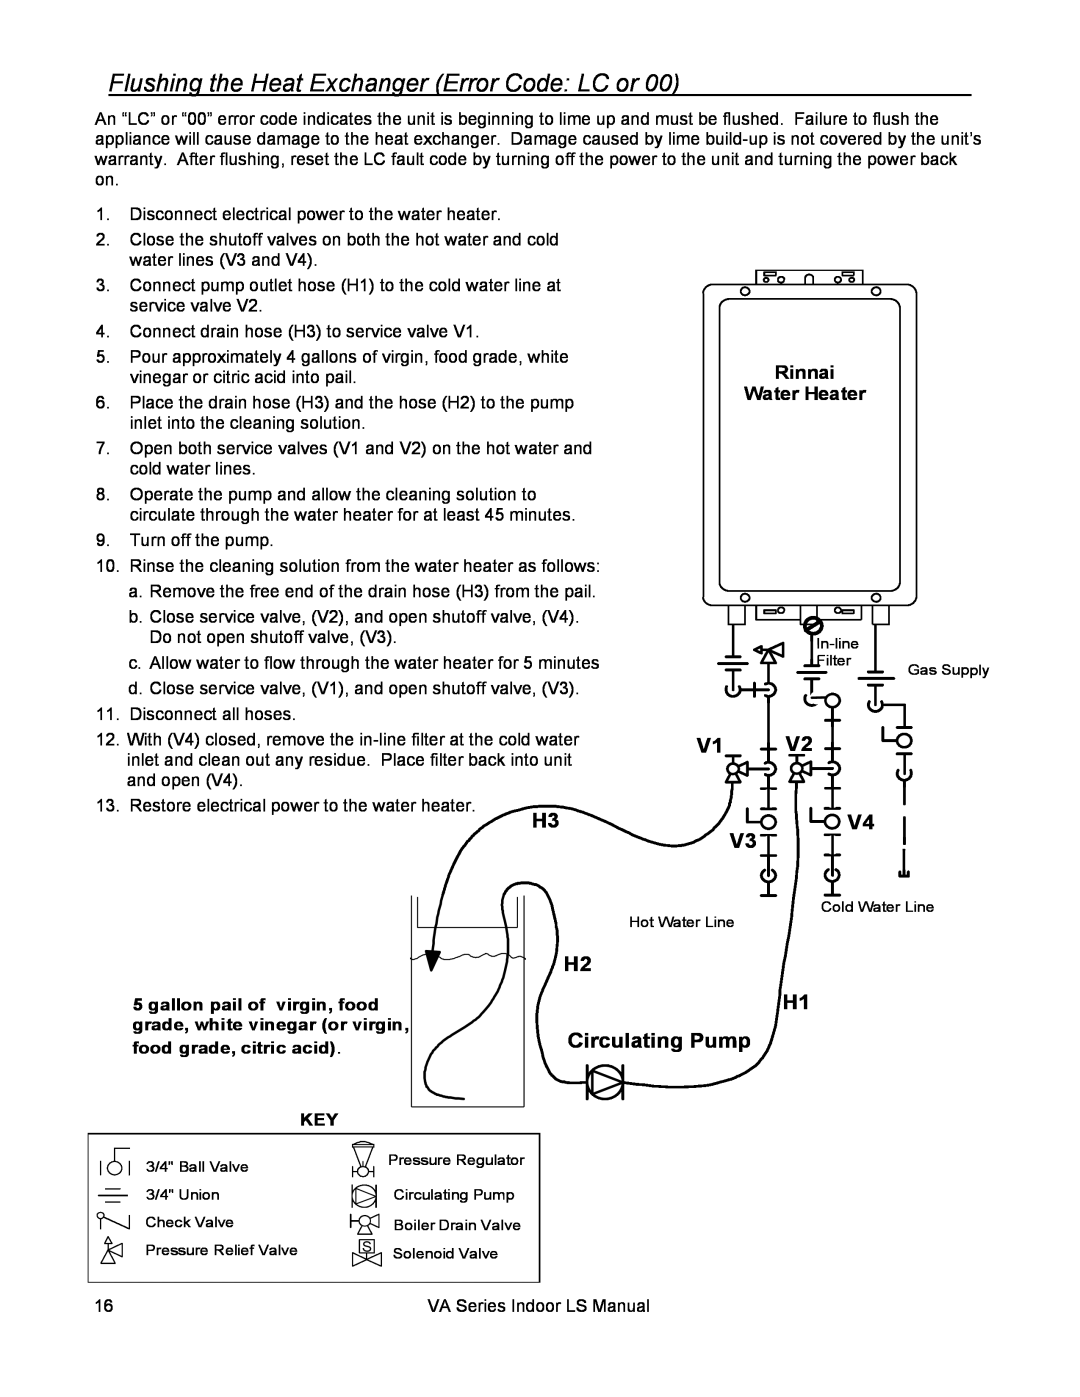 Rinnai R98LSI-ASME, R75LSI Flushing the Heat Exchanger Error Code LC or, H2 H1 Circulating Pump, Rinnai Water Heater 